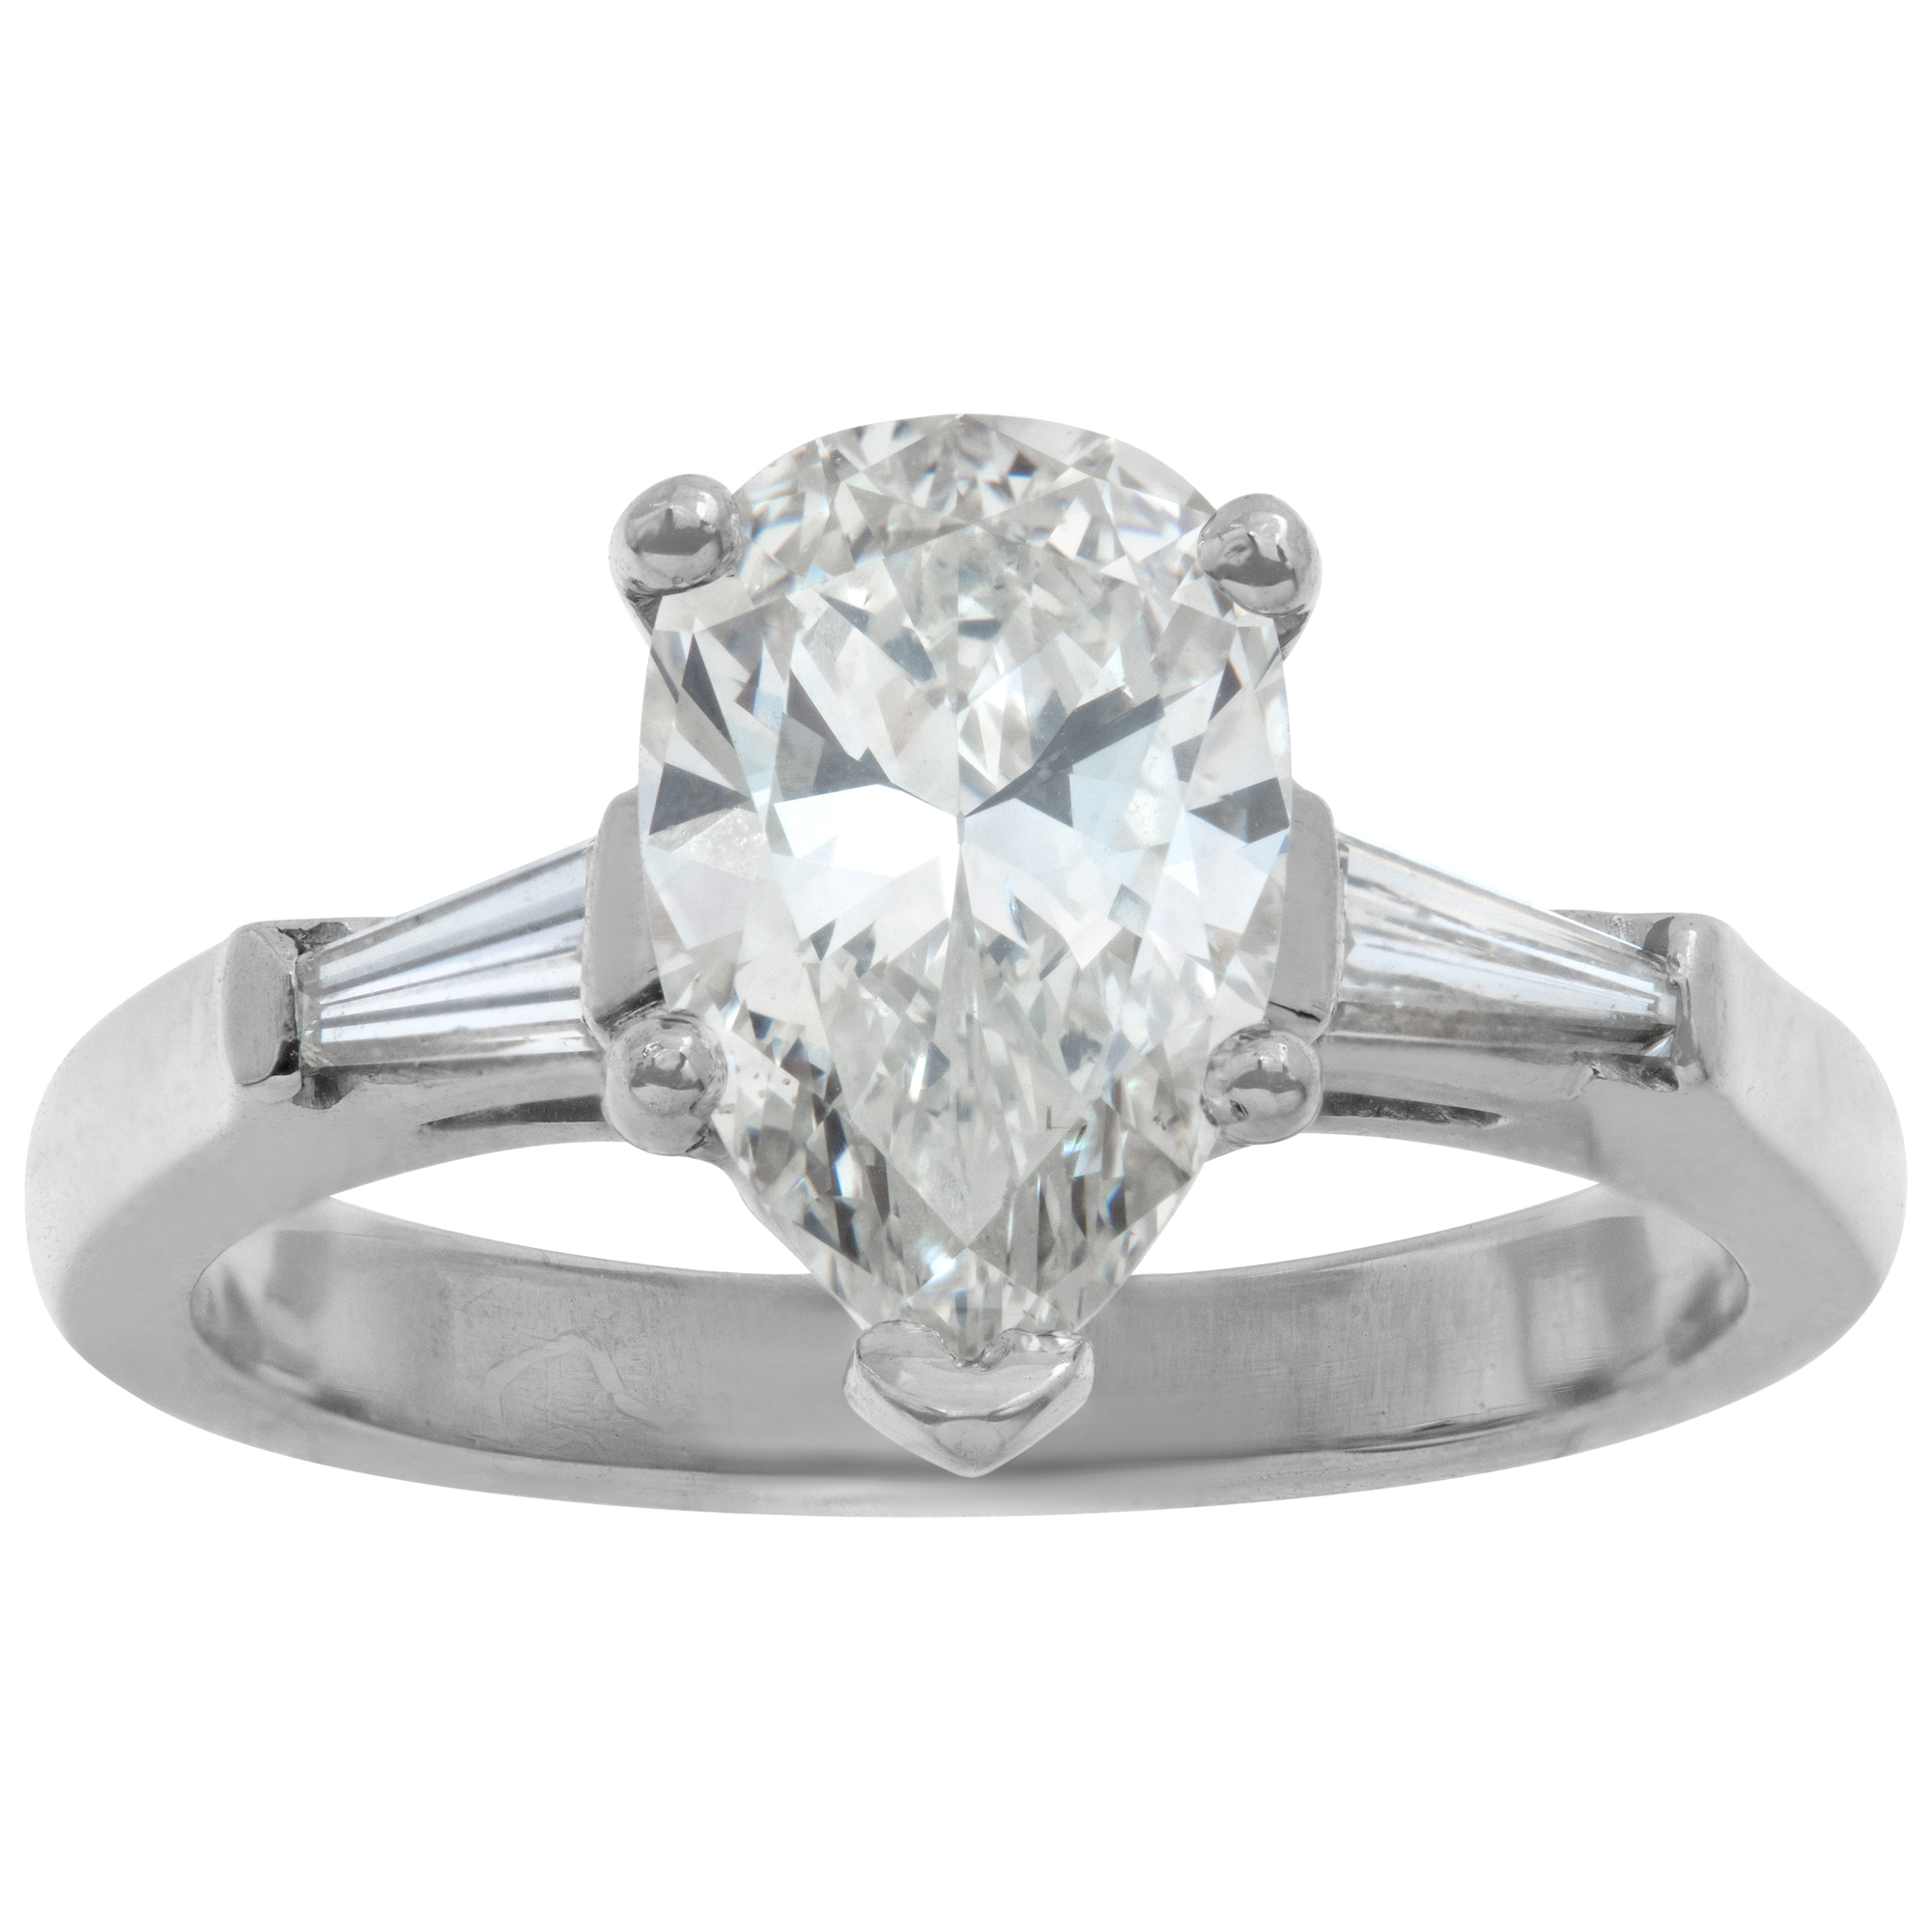 GIA certified pear brilliant shape 1.72 carat diamond (J color, SI1 clarity) ring